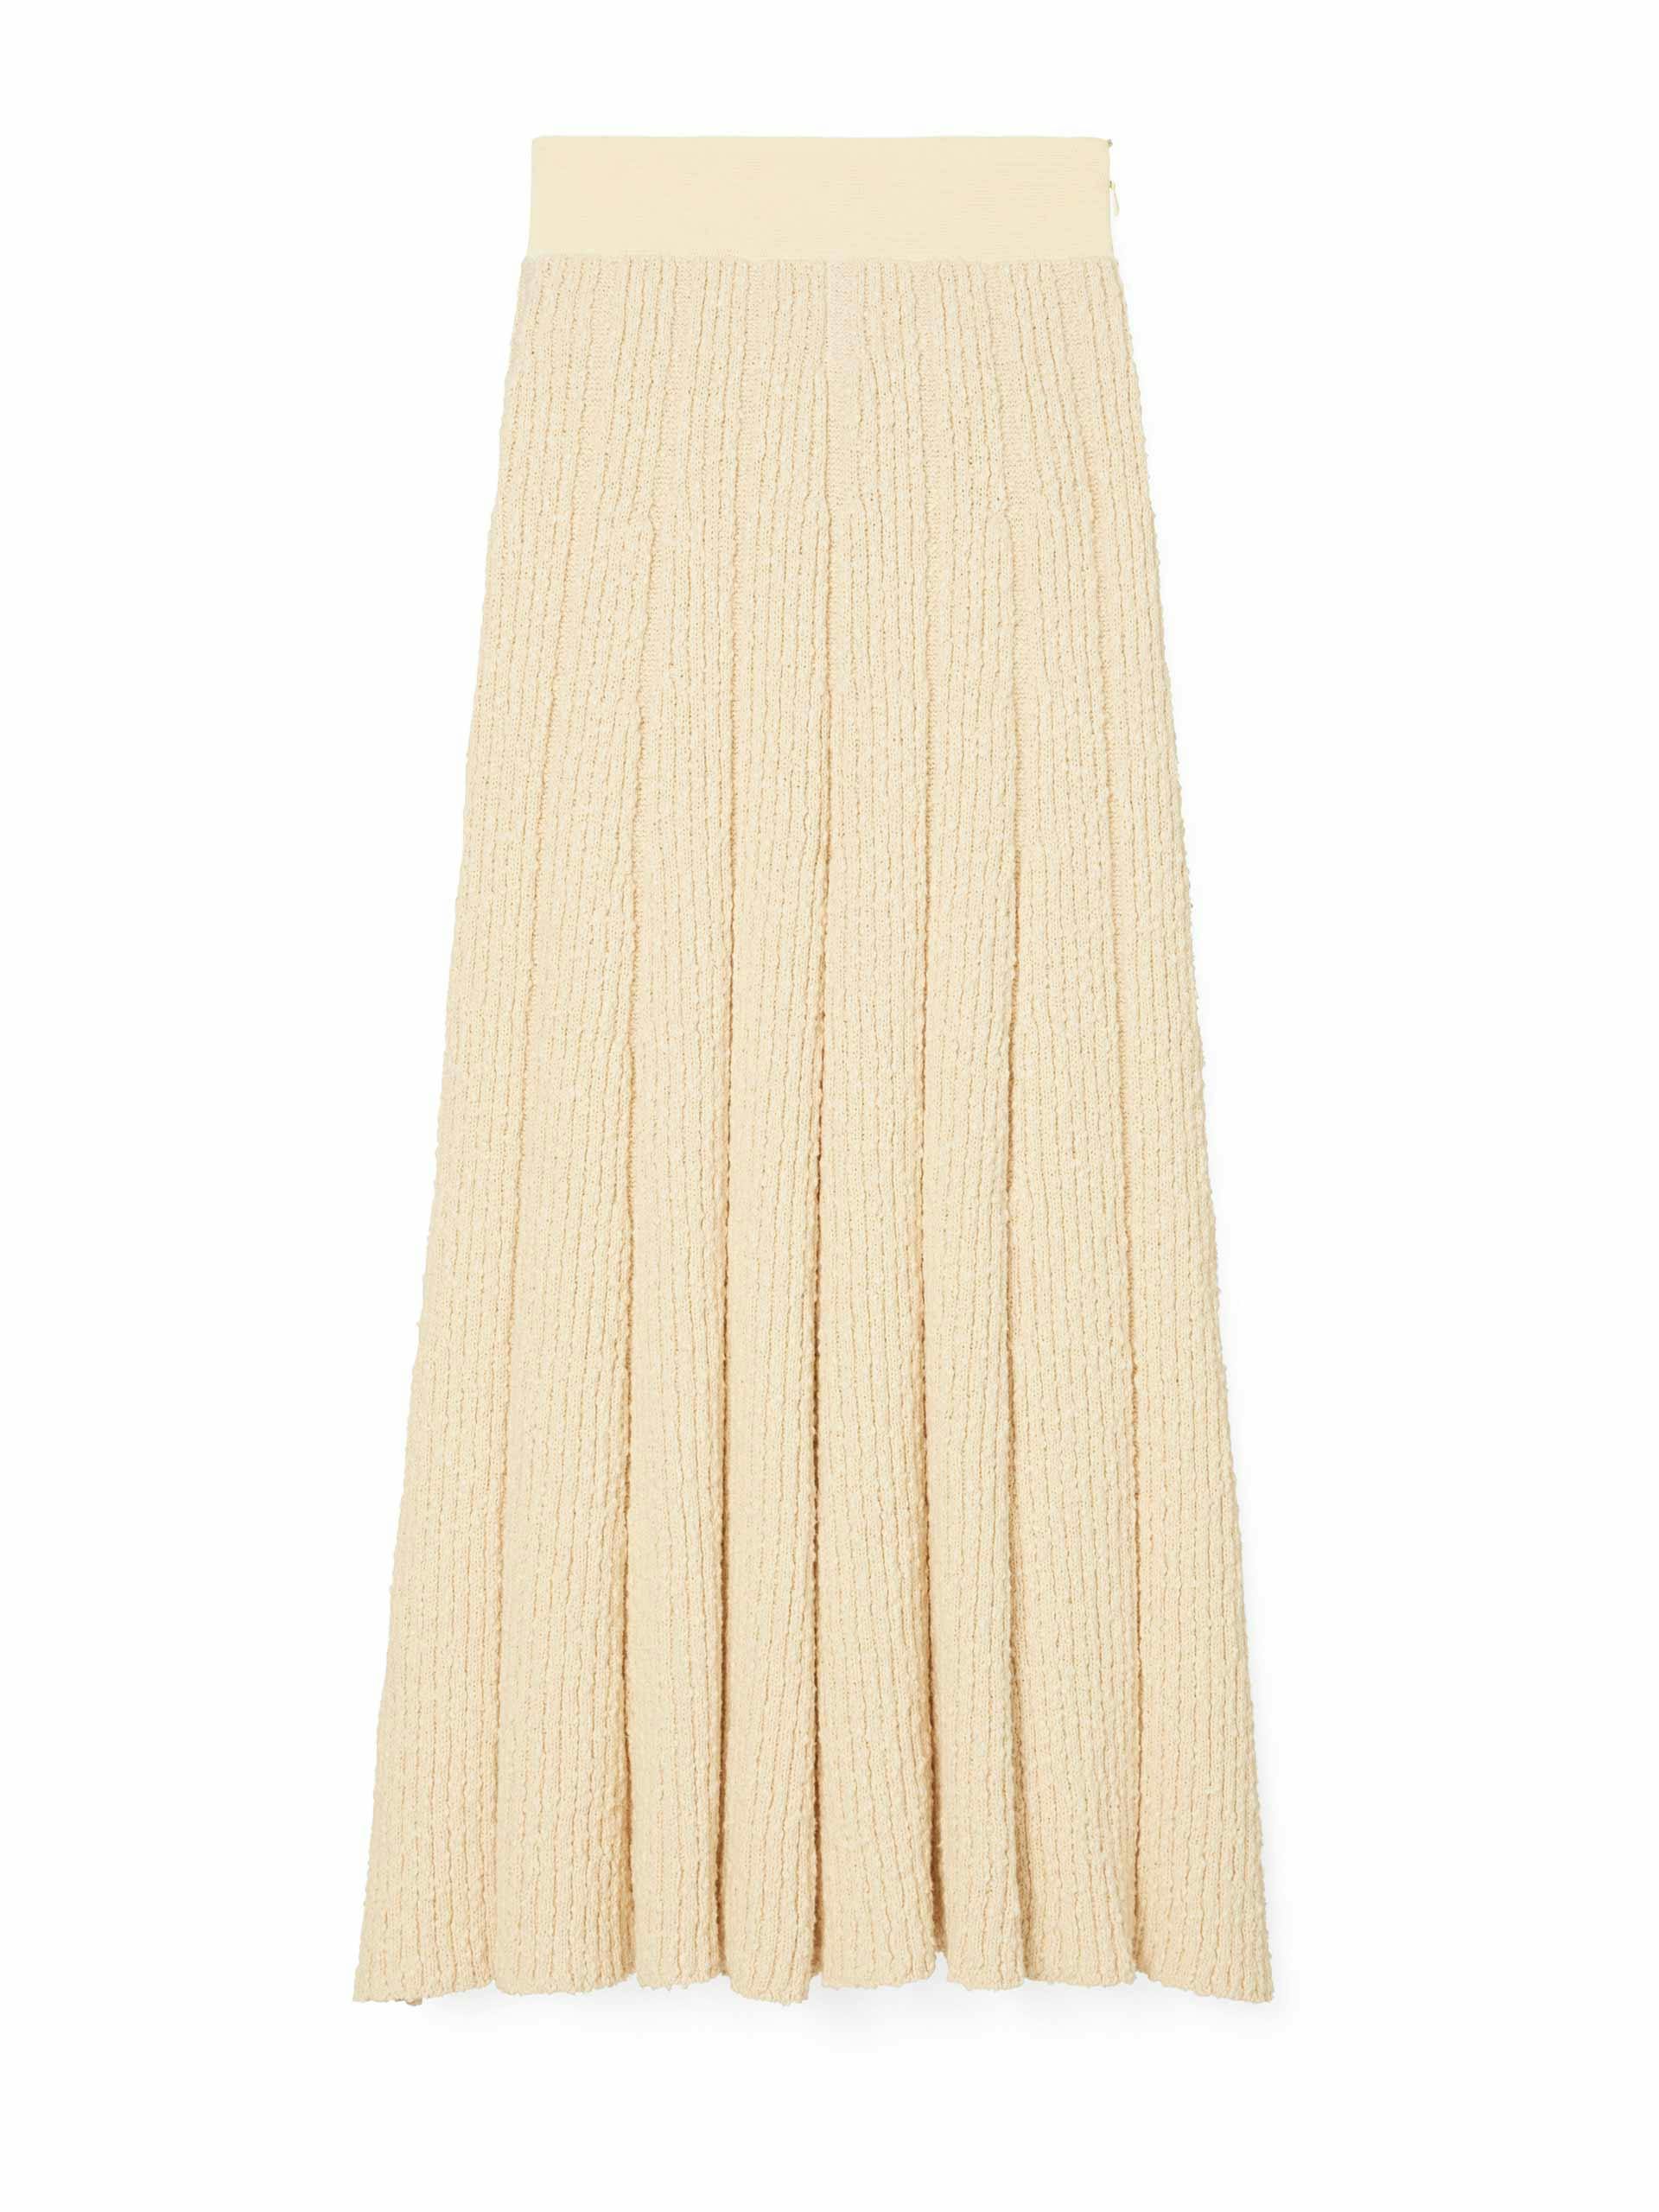 Ribbed knit skirt